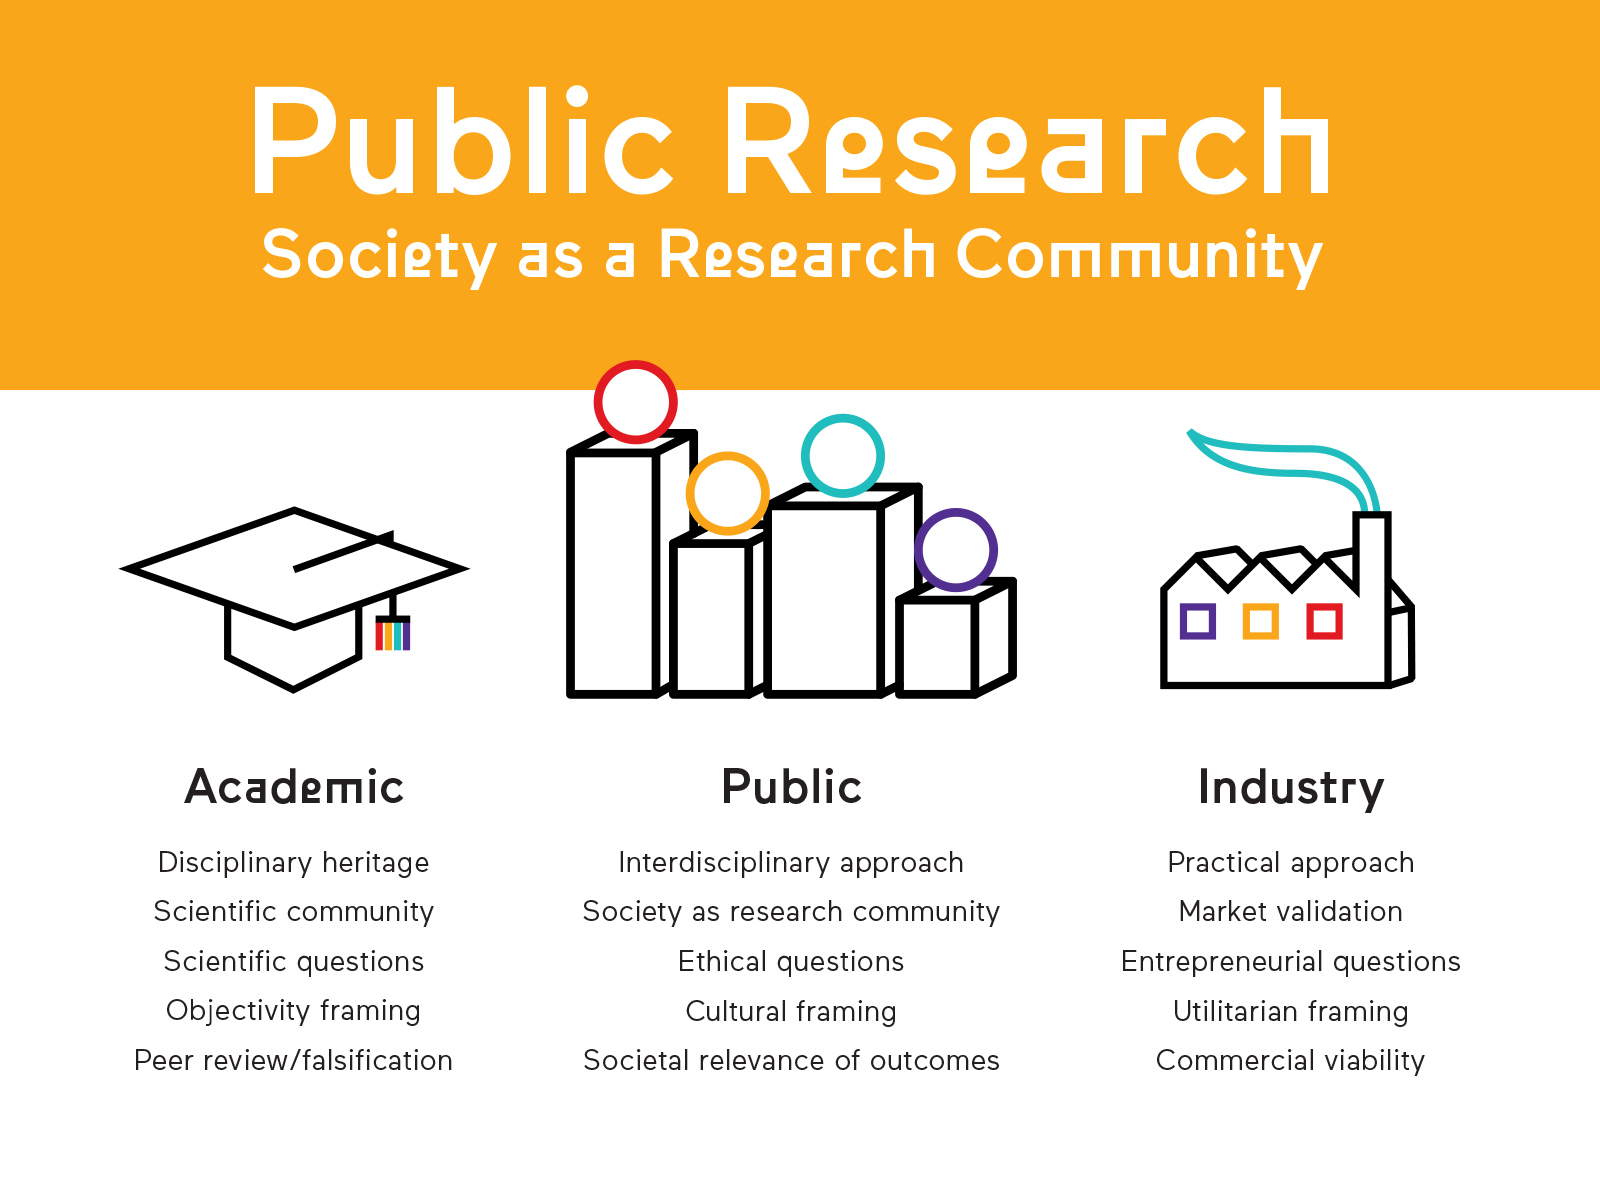 Public research